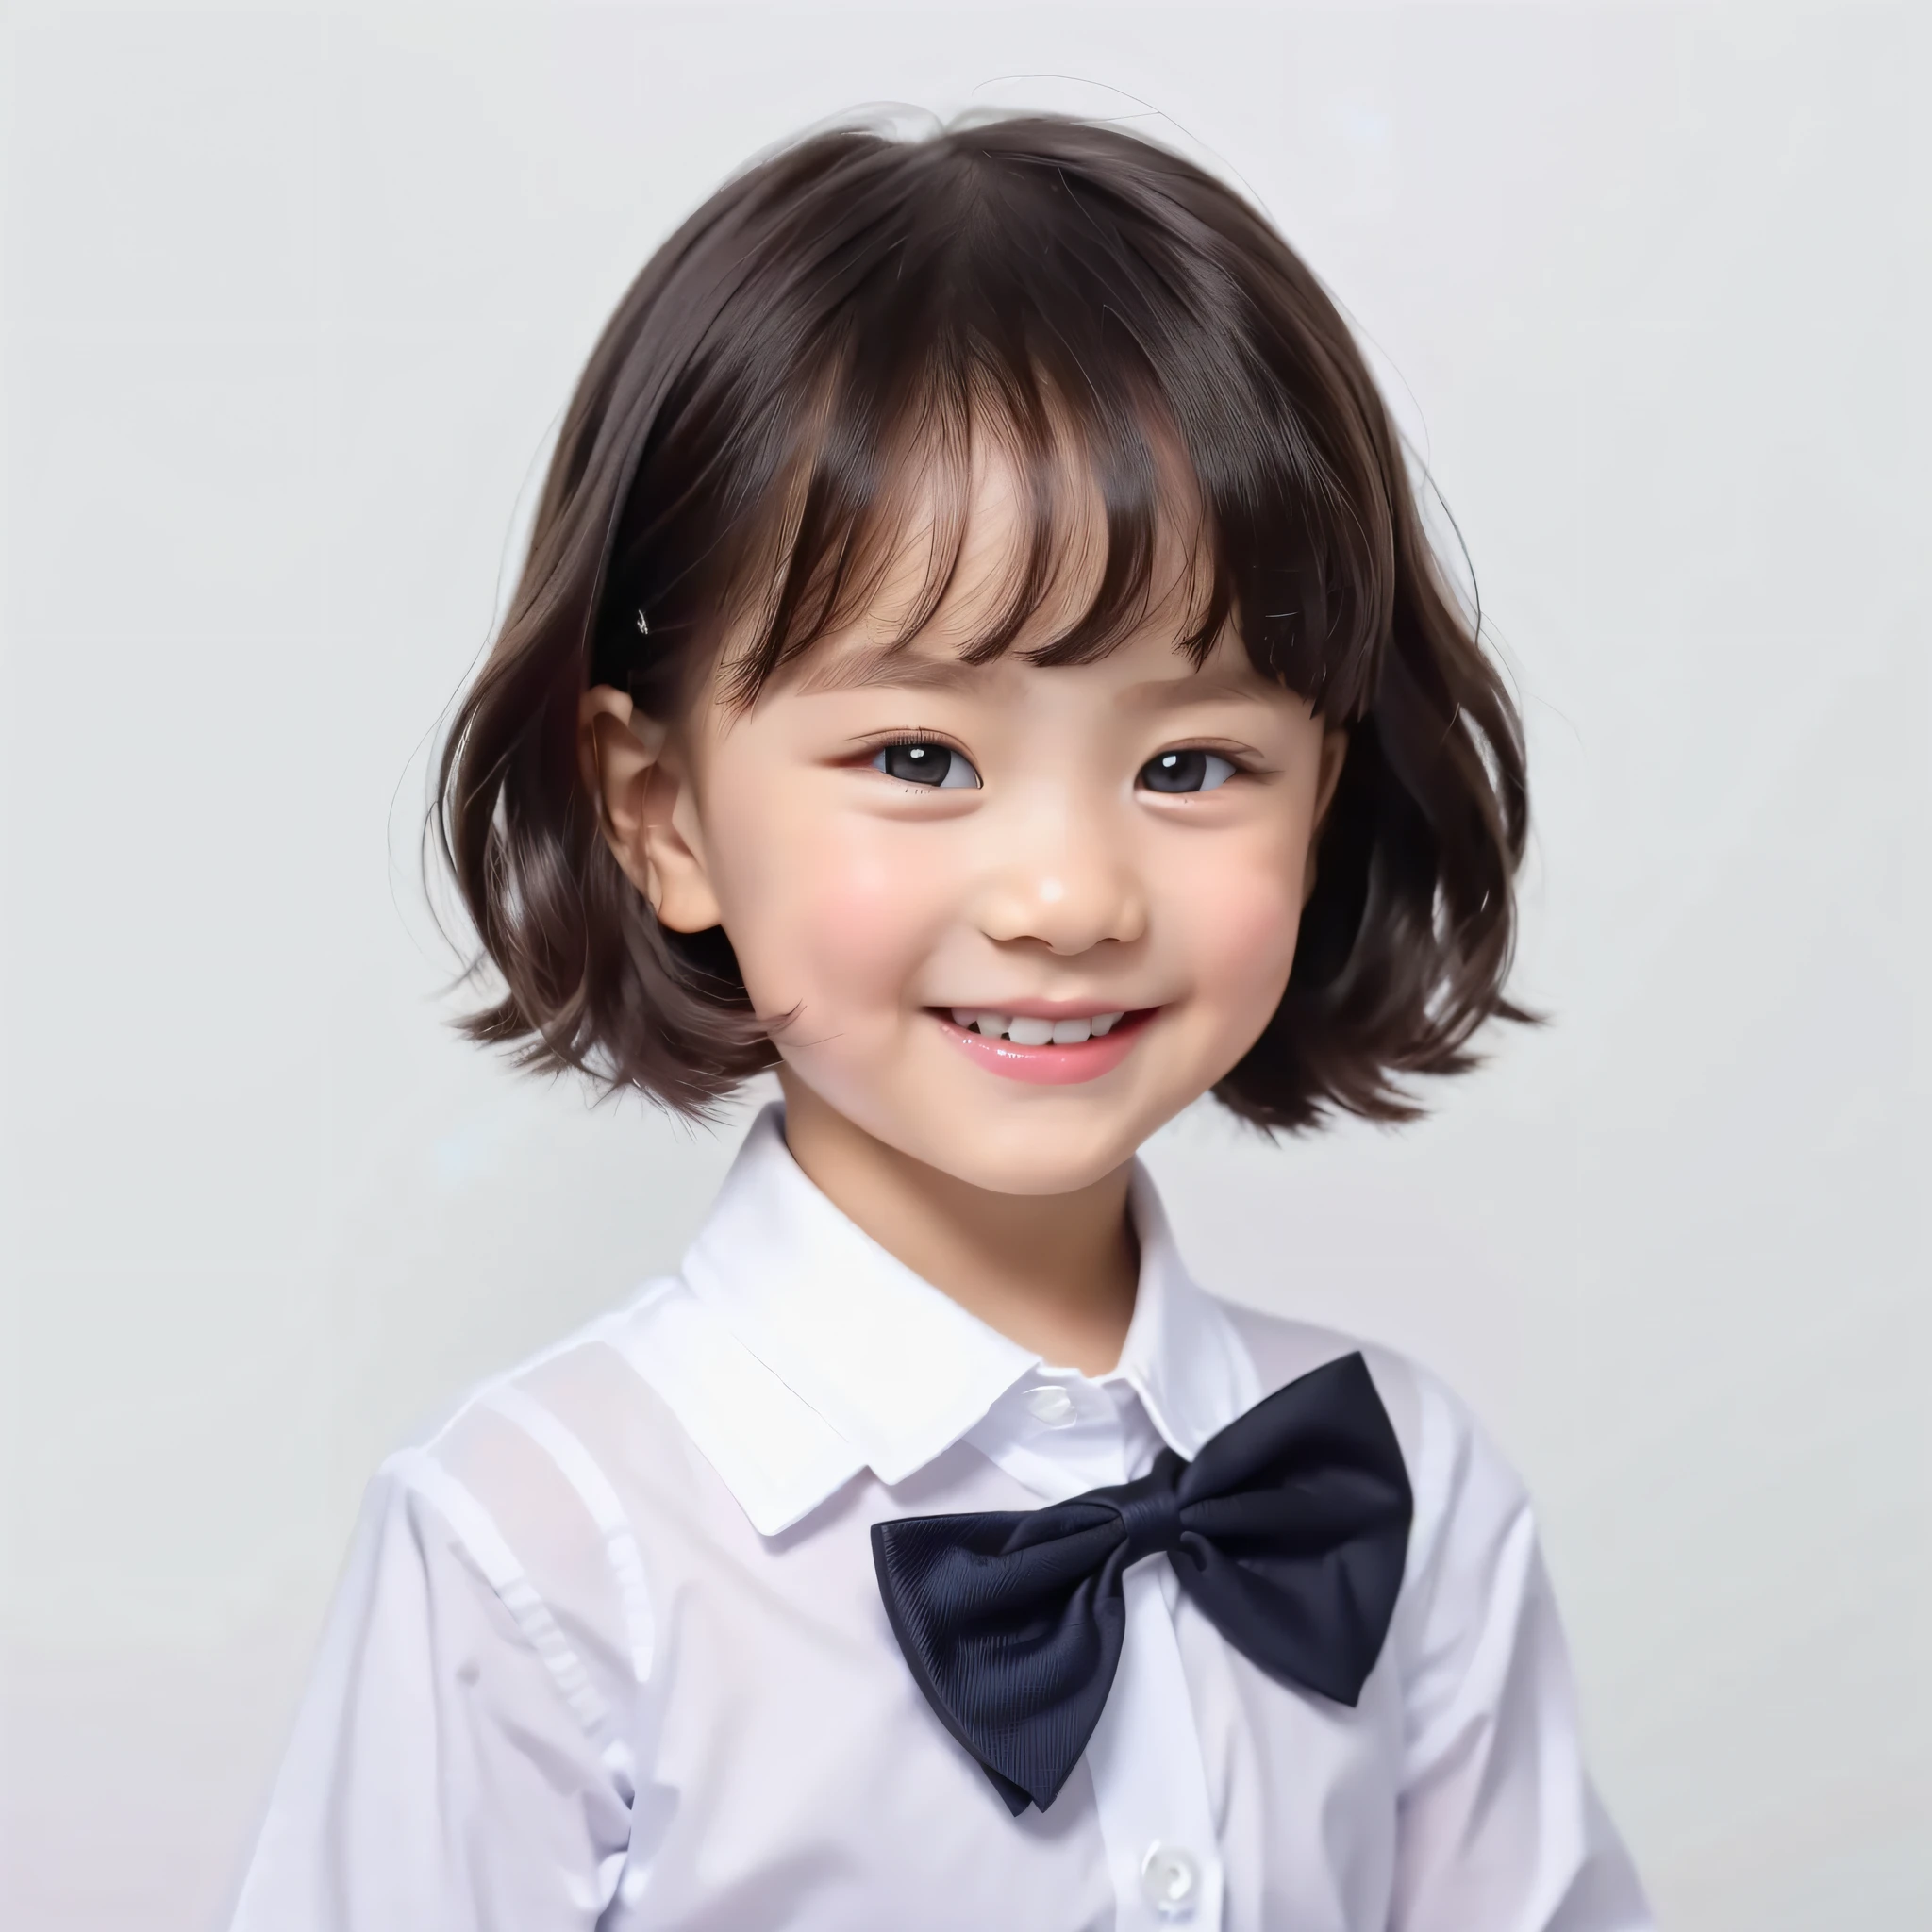 estilo moderno, Fondo blanco, Foto de identificación del niño, lindo, Niña sonriente, ojos oscuros, cabello corto, corbata de moño, claro, alta calidad